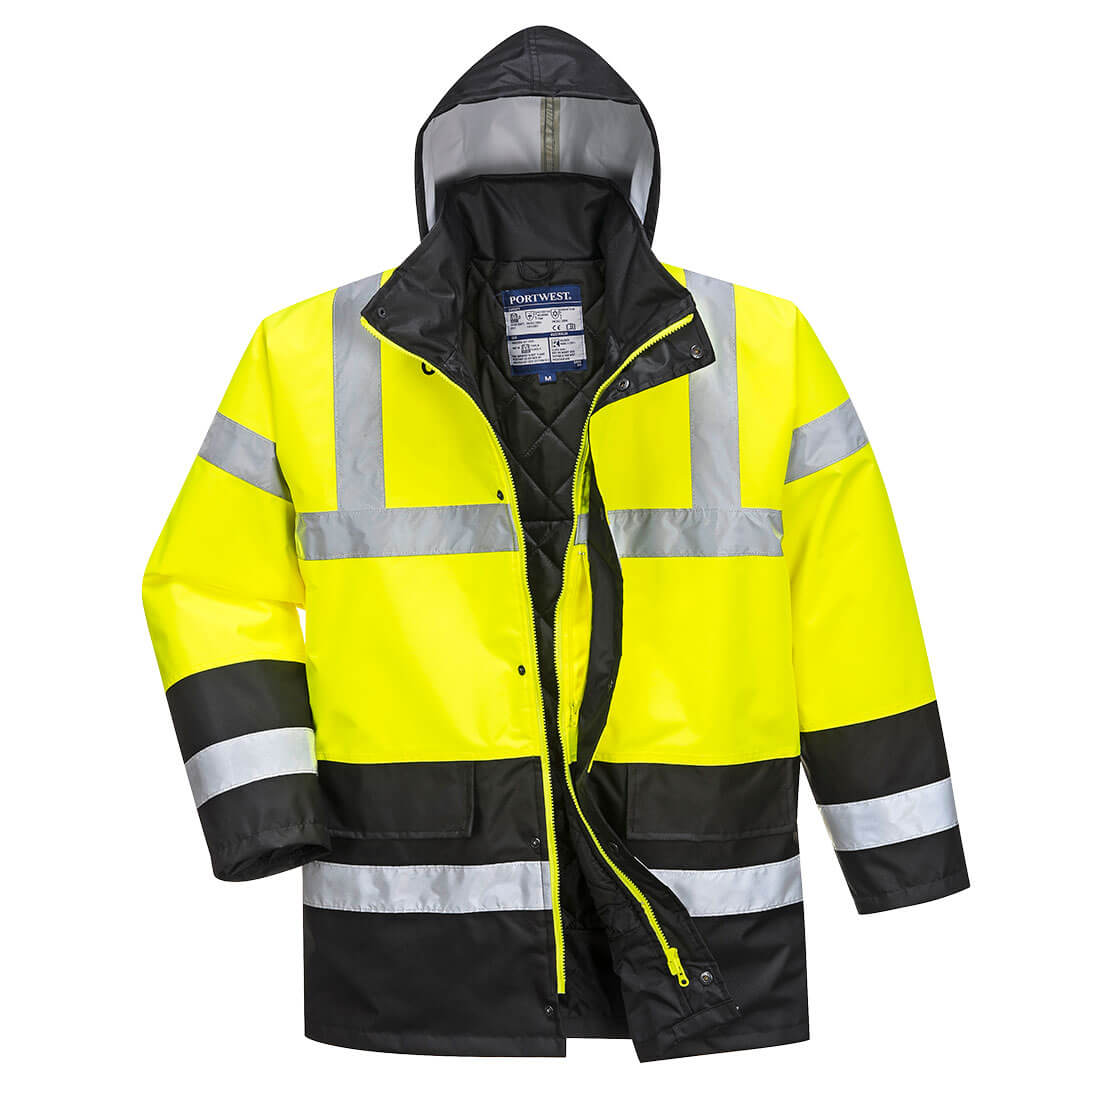 Portwest S466 Hi-viz Contrast Traffic Jacket Waterproof Thermal Insulation CE Certified Yellow/Black - Hamtons Direct